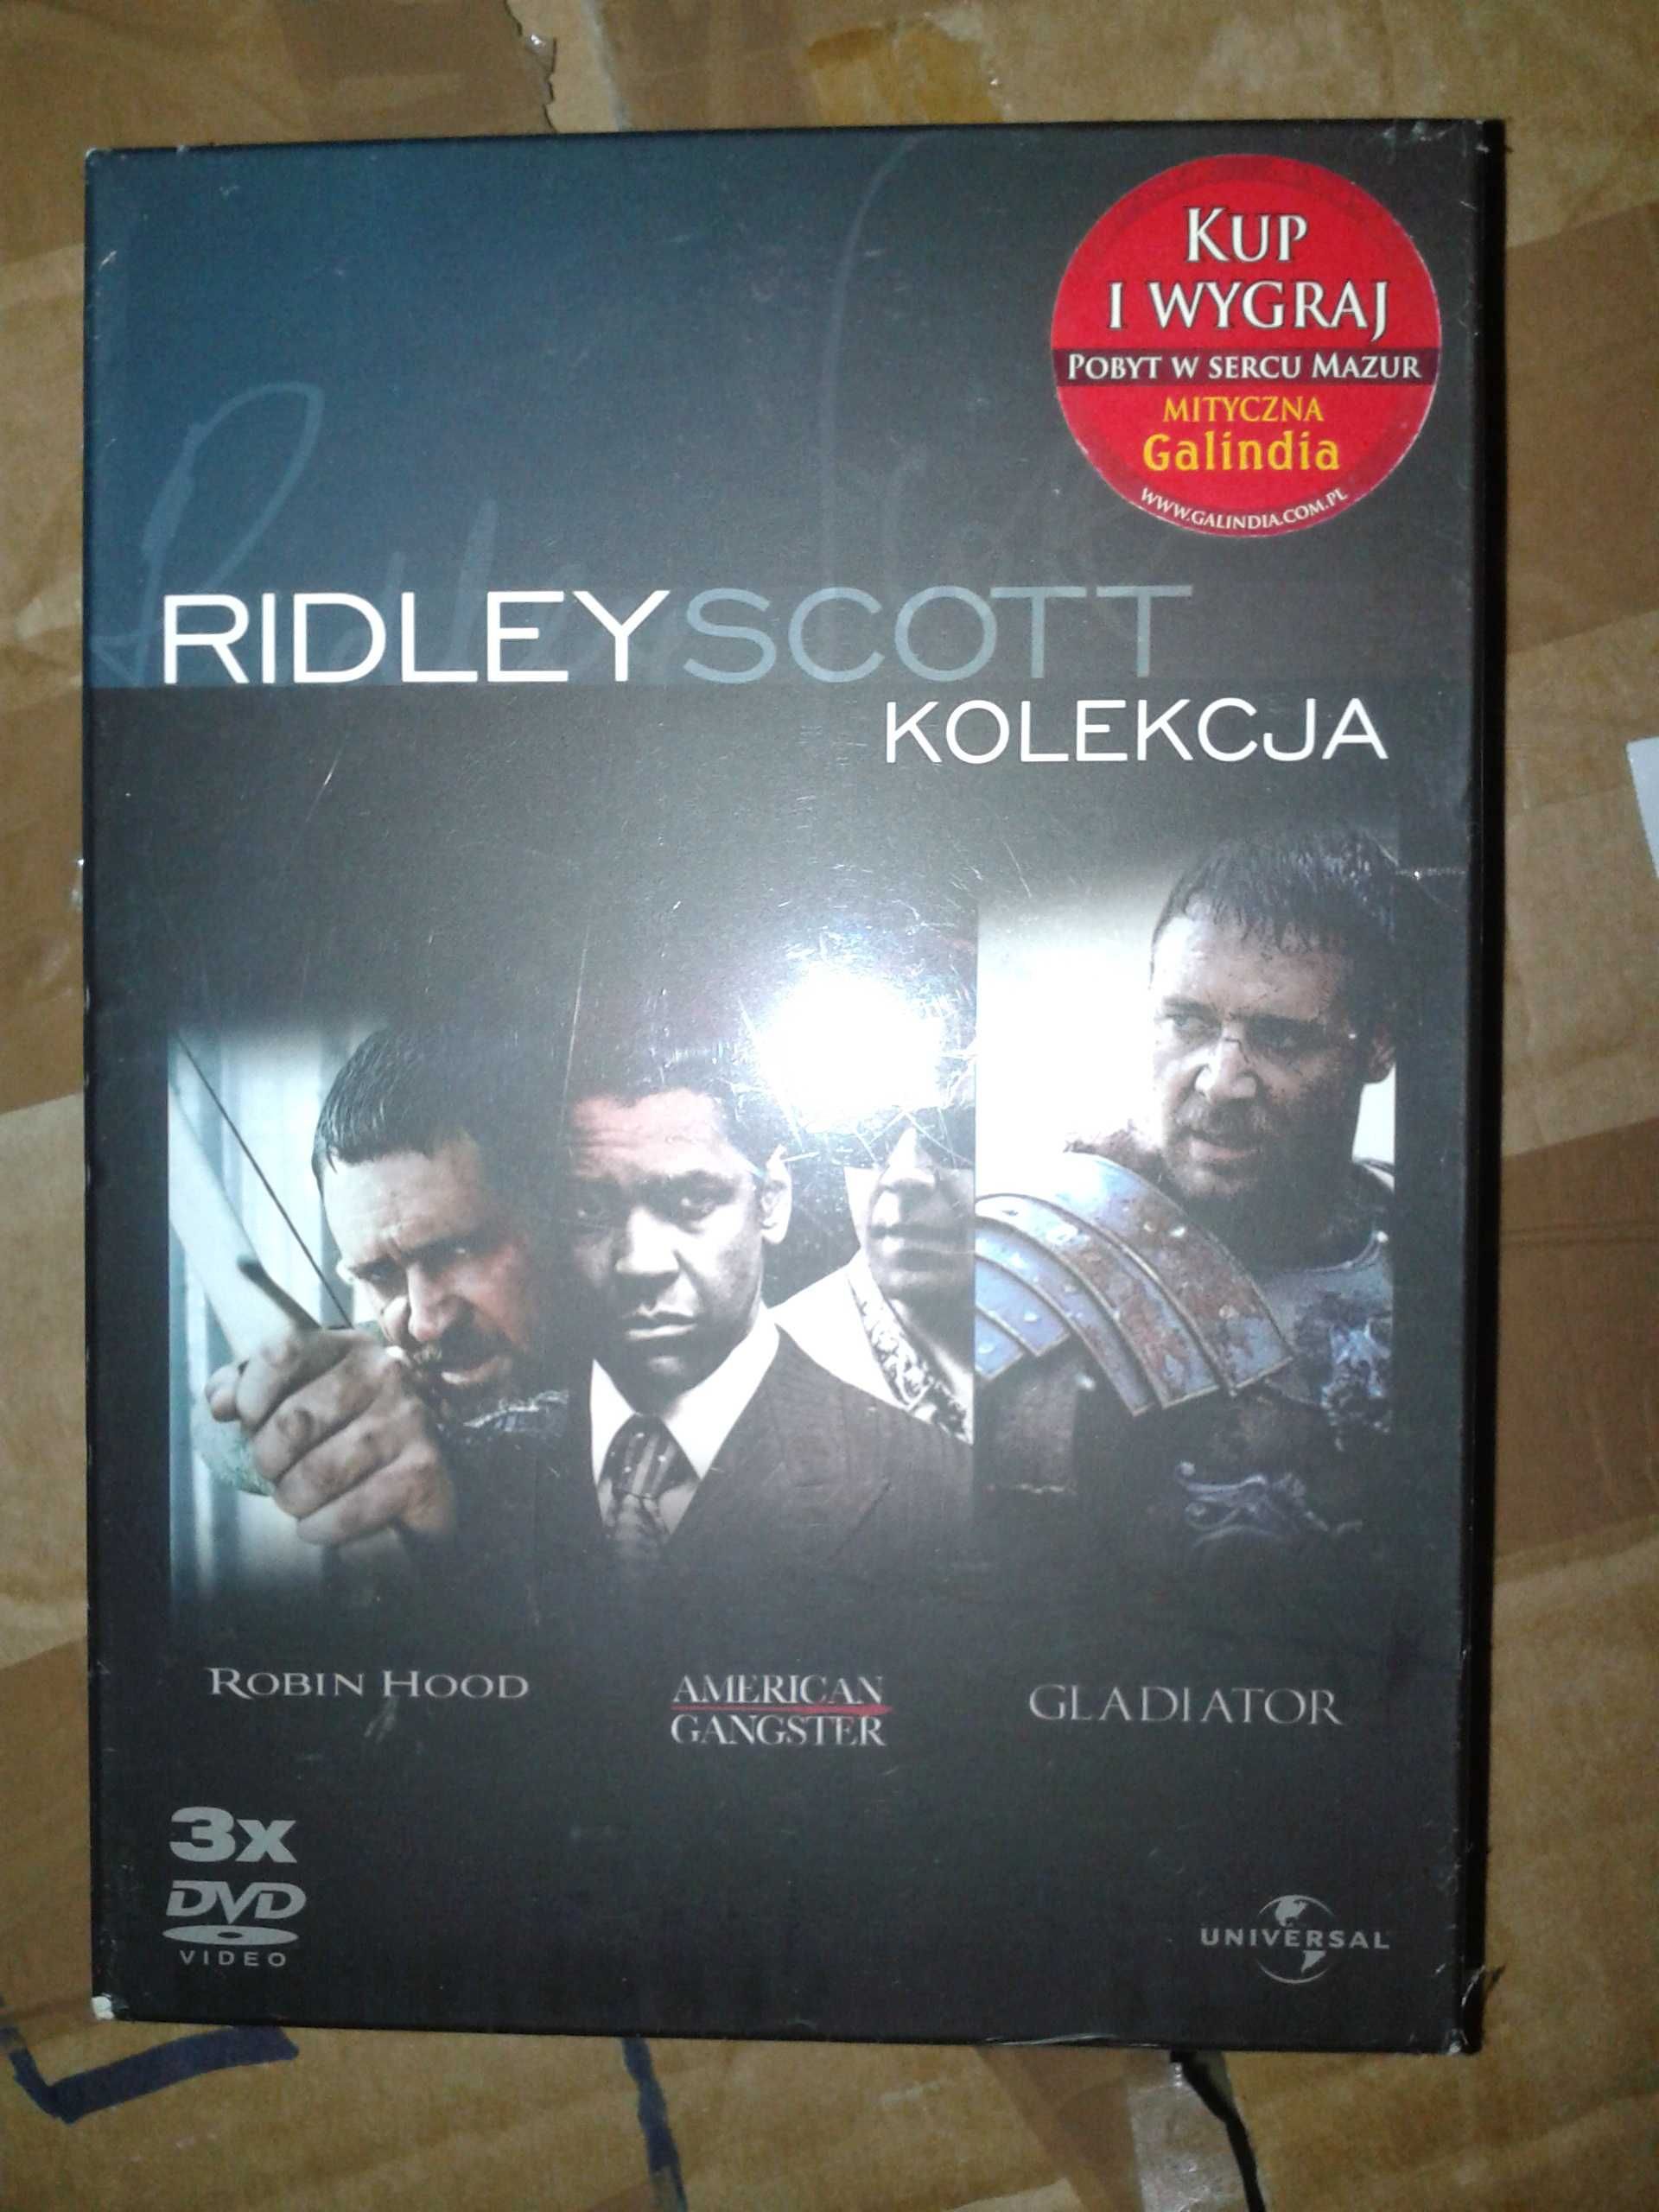 Film DVD kolekcja Ridley Scott Gladiator Robin Hood American gangster